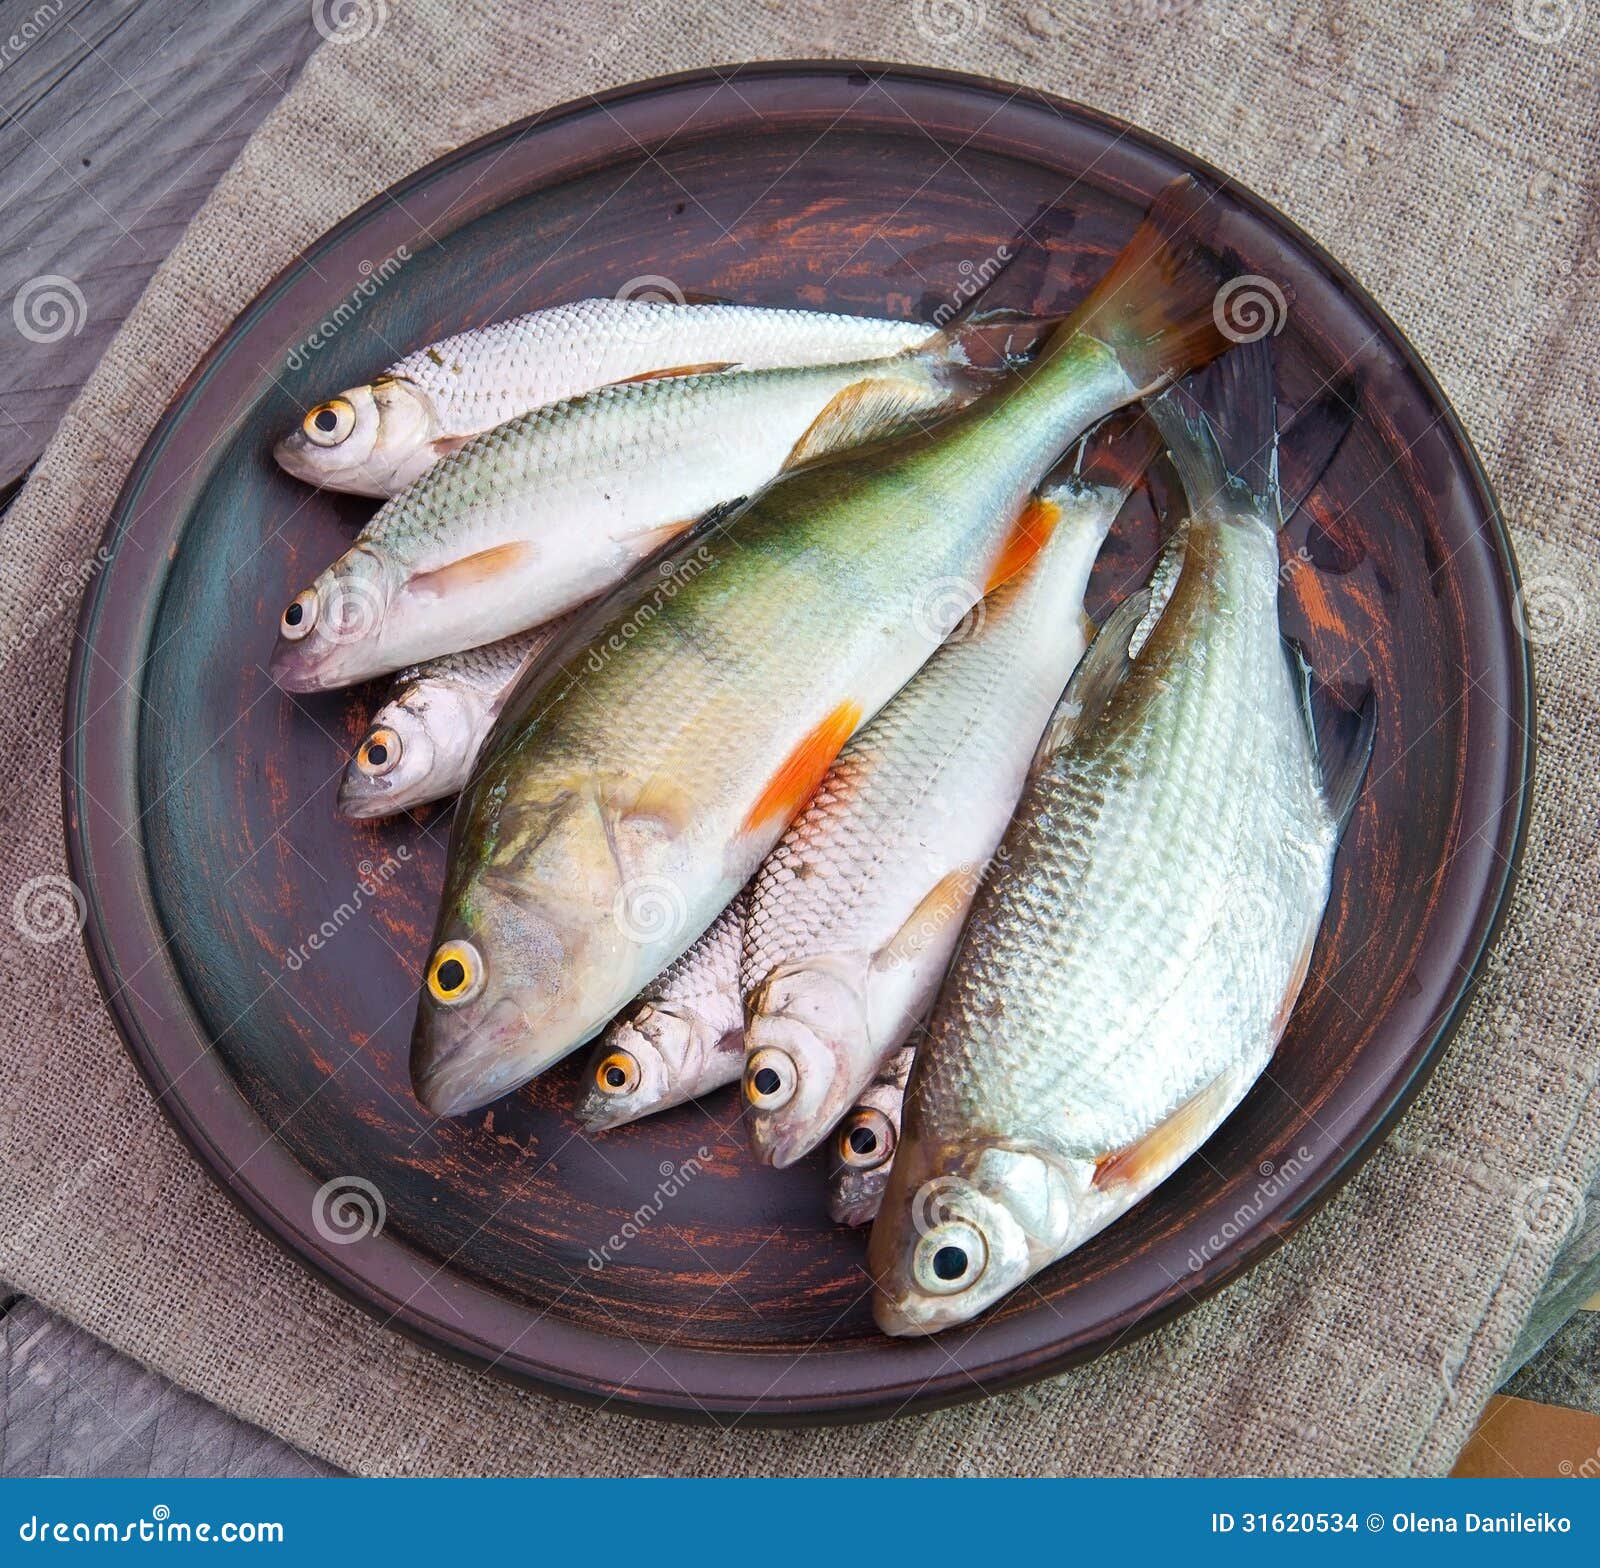 Можно давать курам рыбу. Сырая рыба. Рыба в миске. Курукуру рыба. Рыба сырая фото.